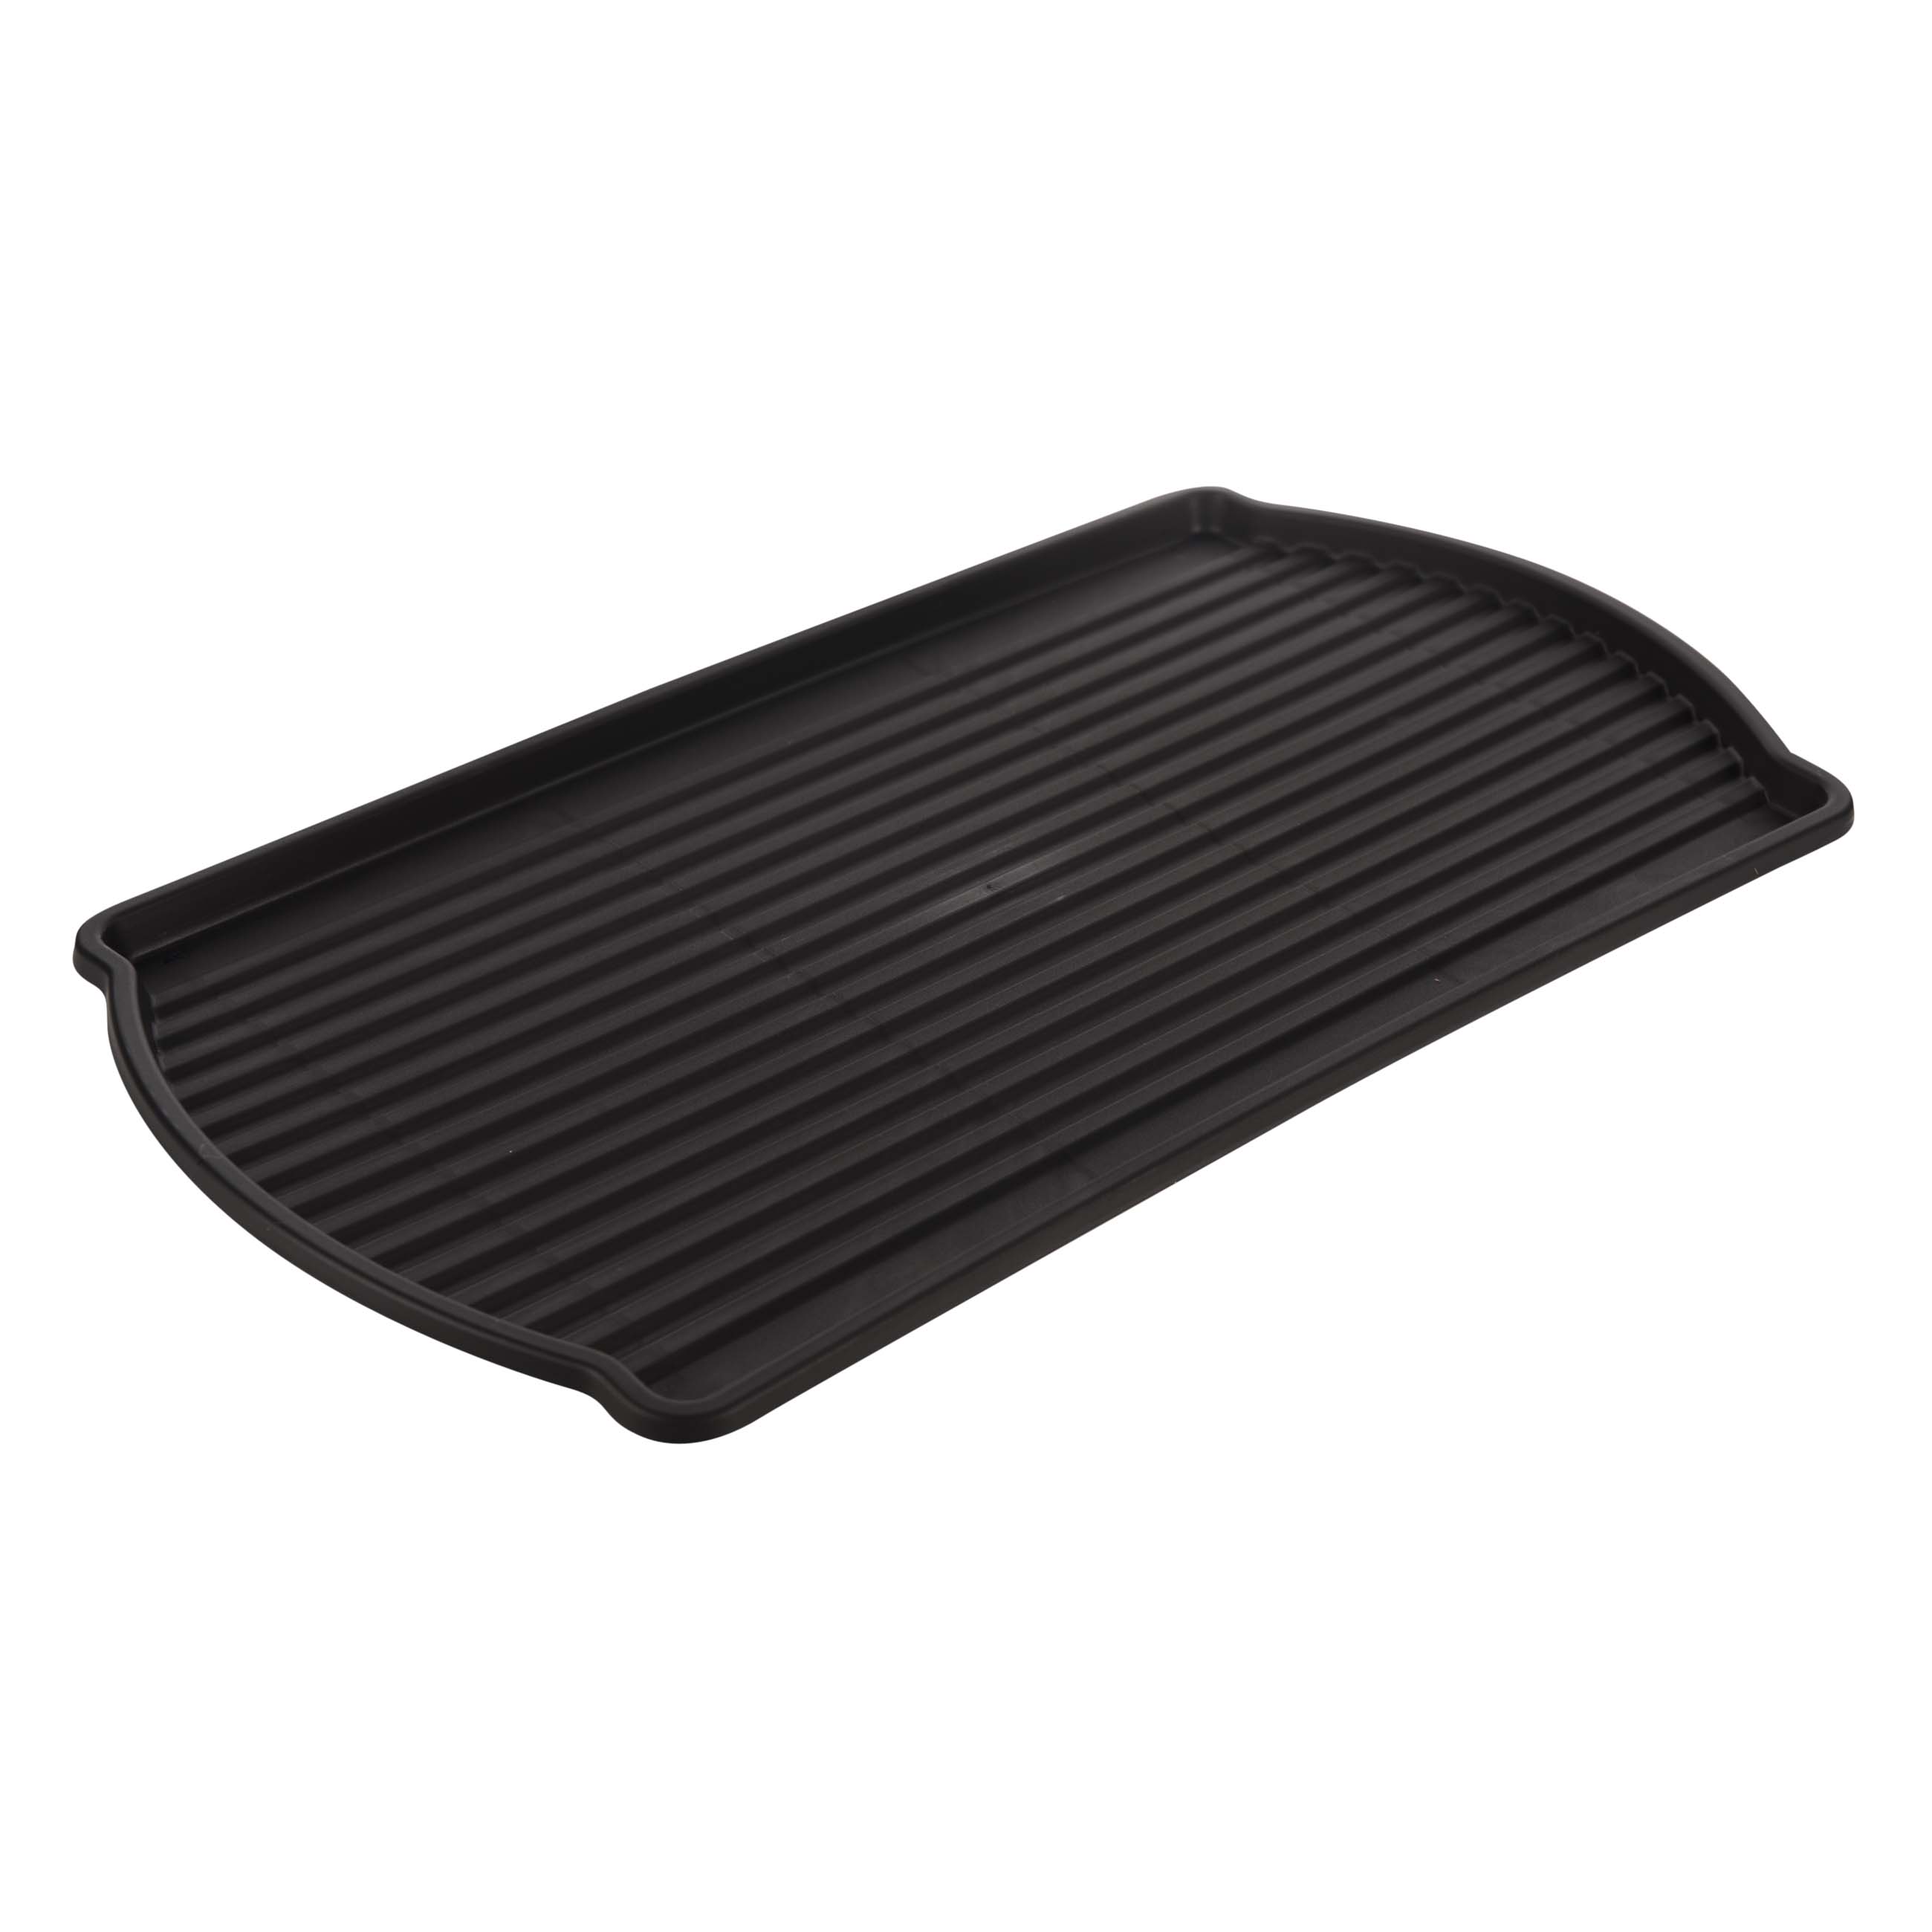 Dish rack, 47x26 cm, with tray, plastic / metal, black, Black style изображение № 2